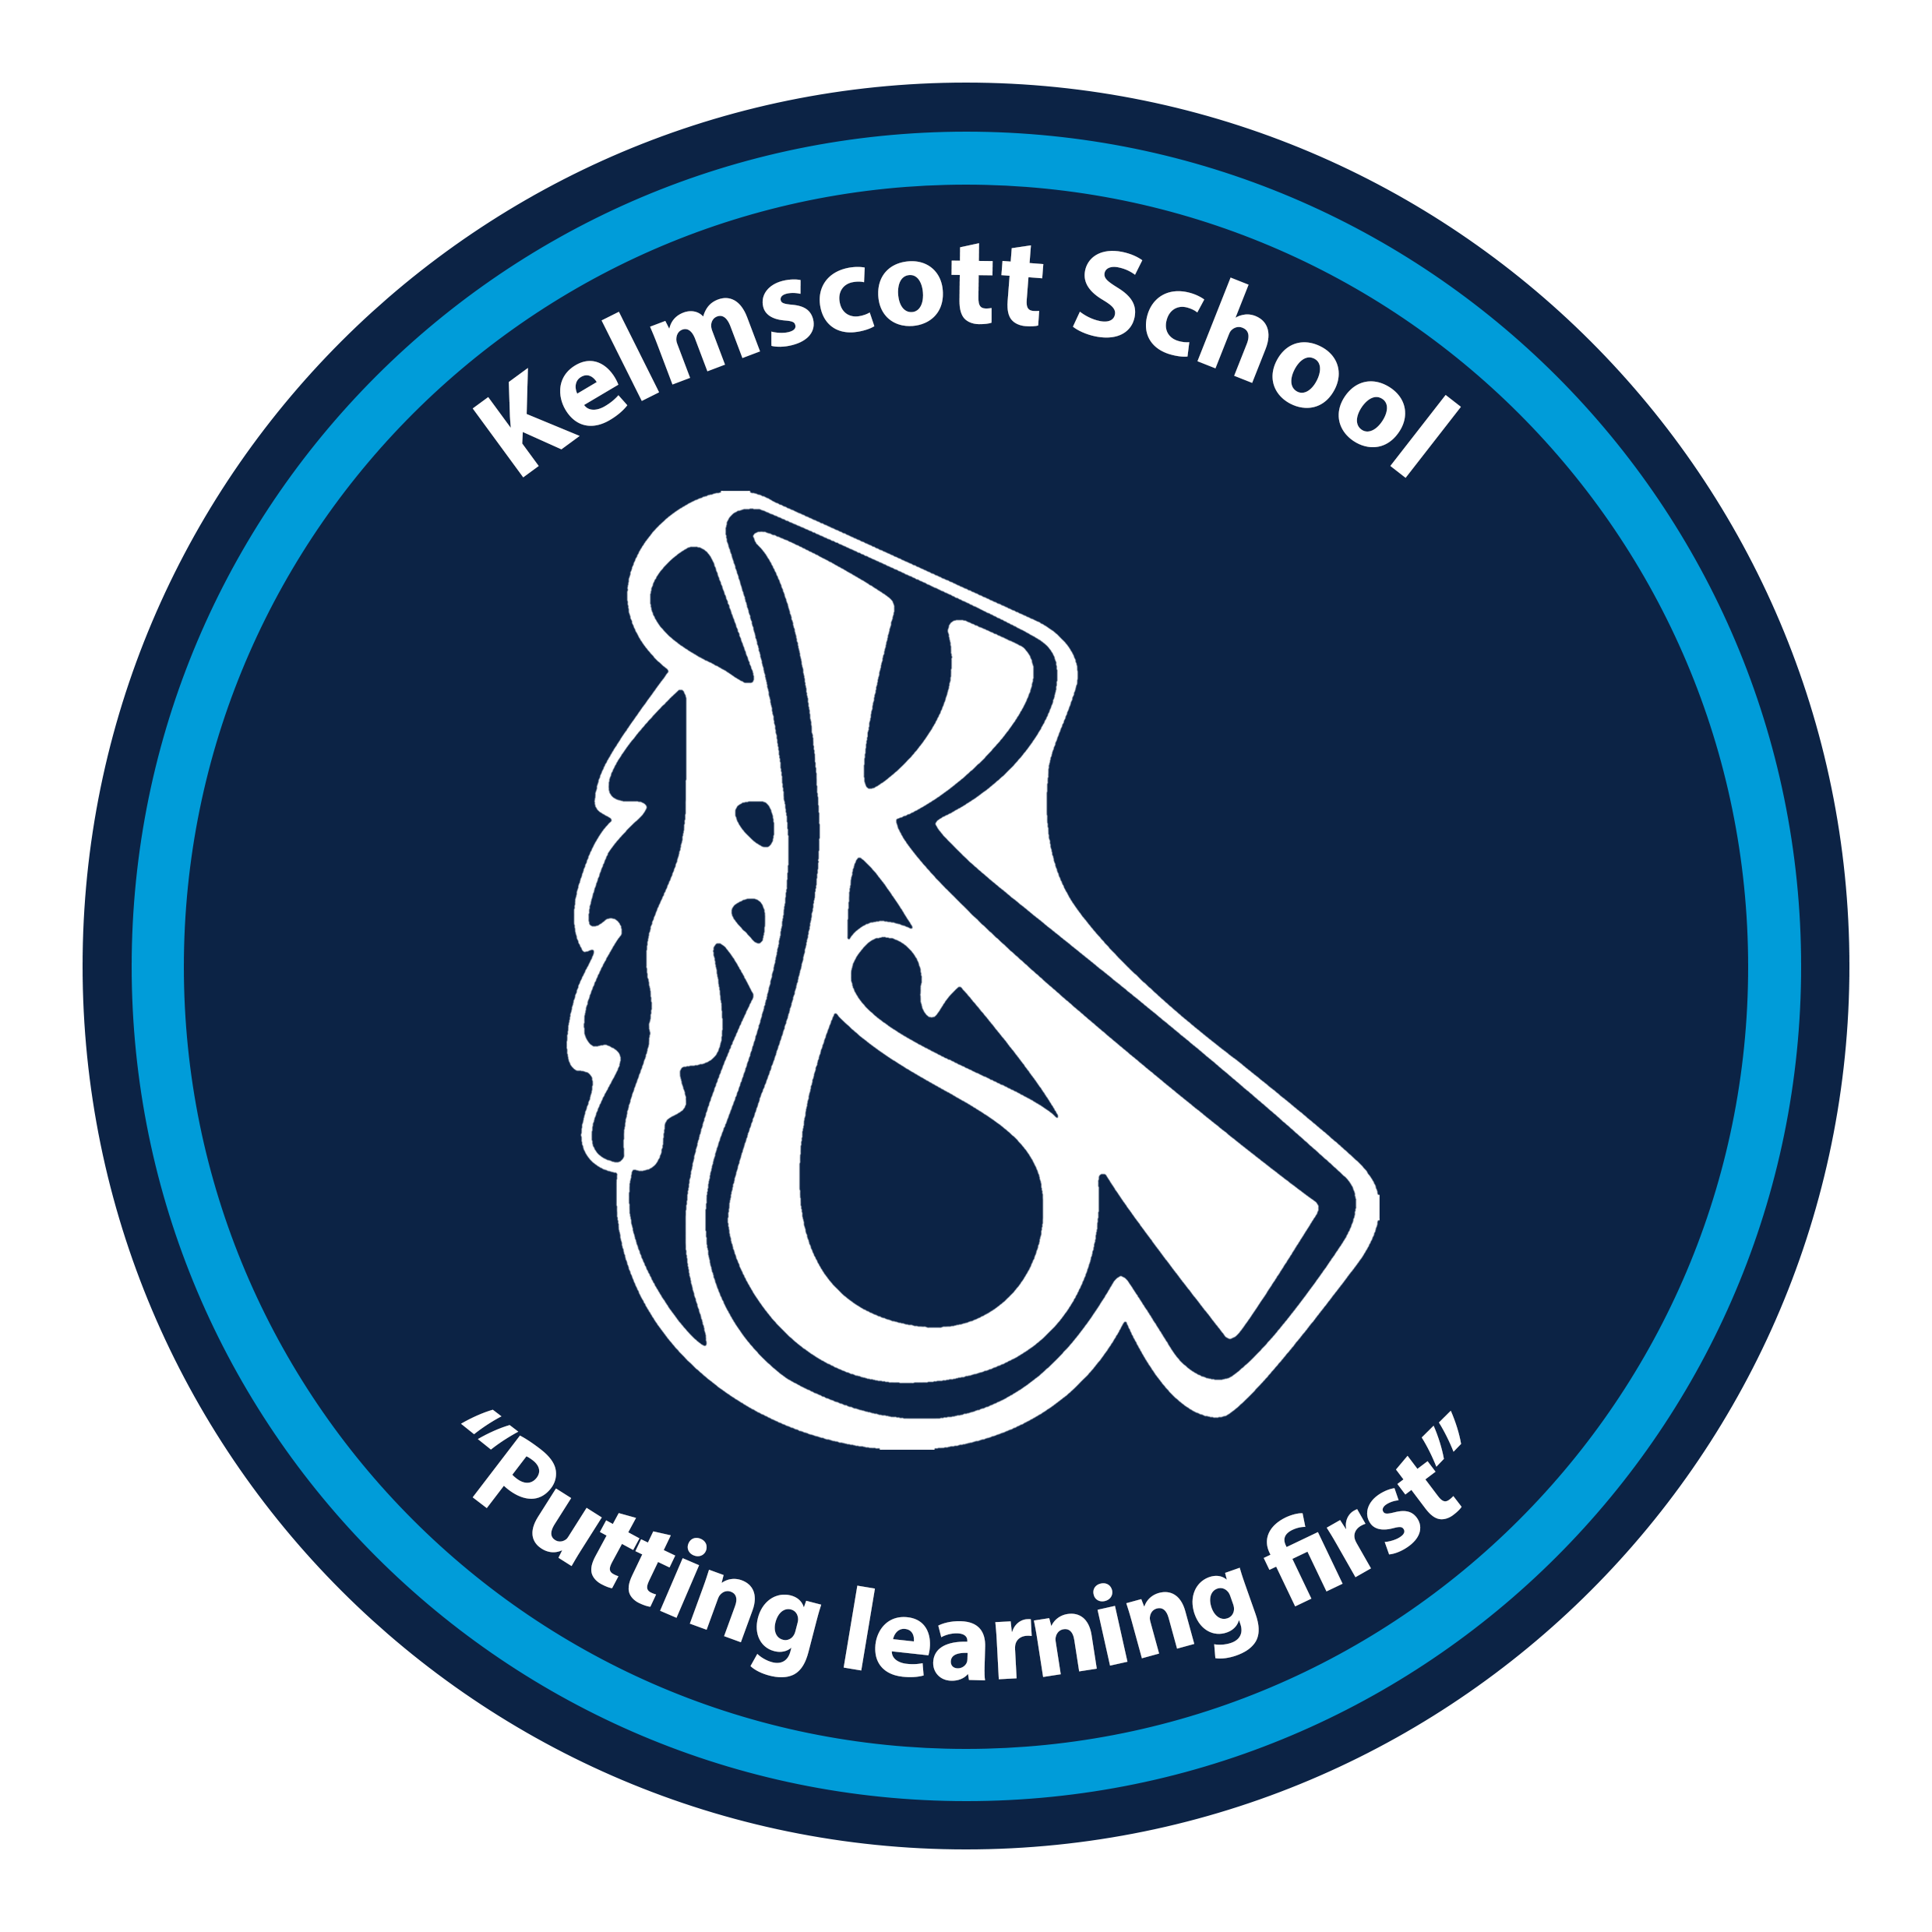 Kelmscott School校徽